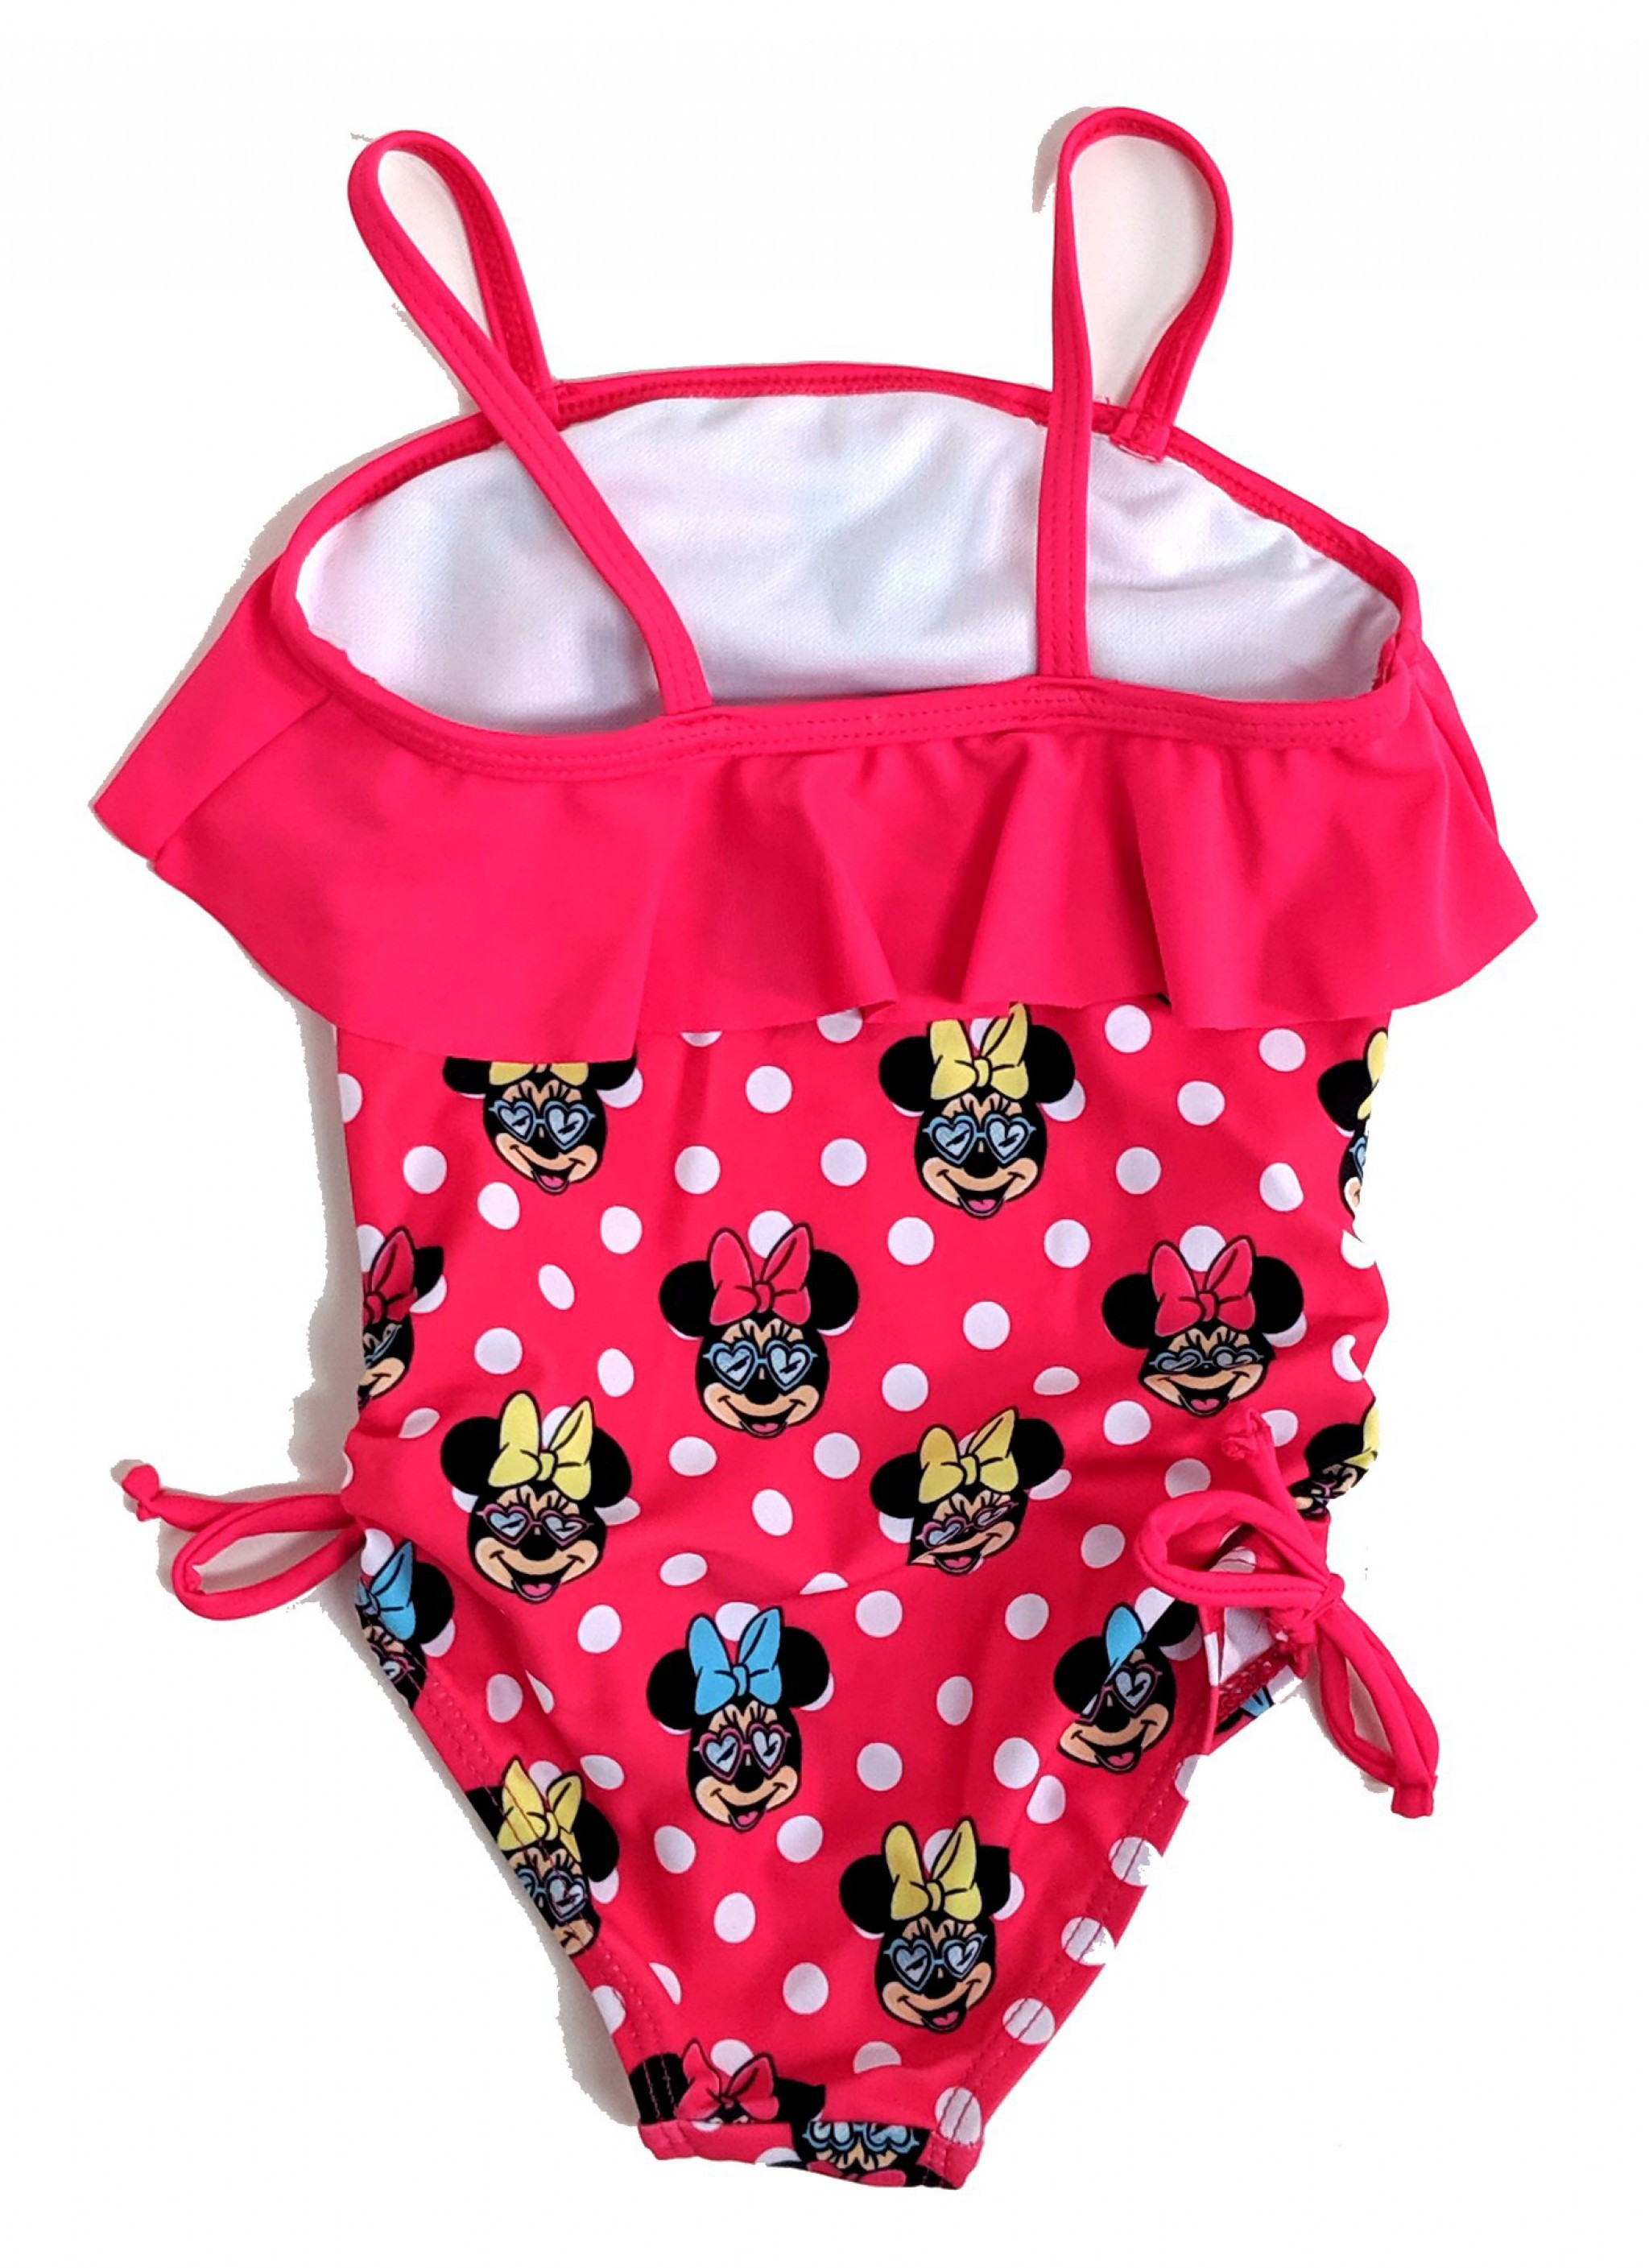 brandNEW Minnie Mouse GIRLS KIDS SWIMWEAR SWIM SUIT SWIMMING BATHER swimsuit 1pc 